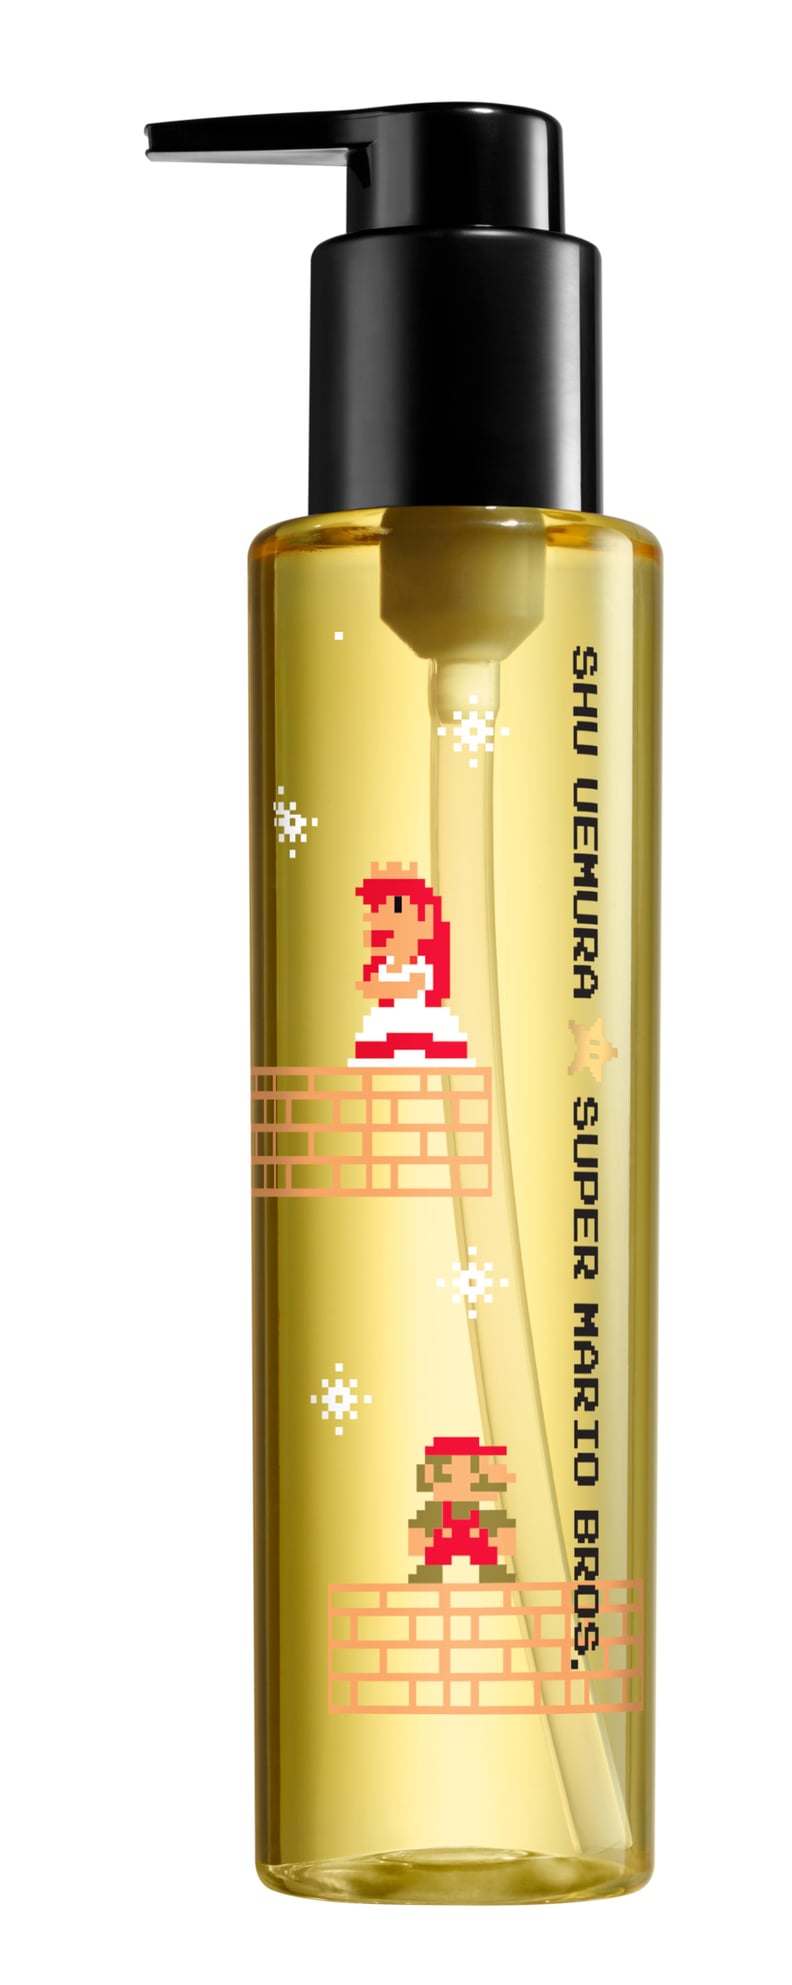 Shu Uemura x Super Mario Bros Essence Absolue Nourishing Protective Oil, $69